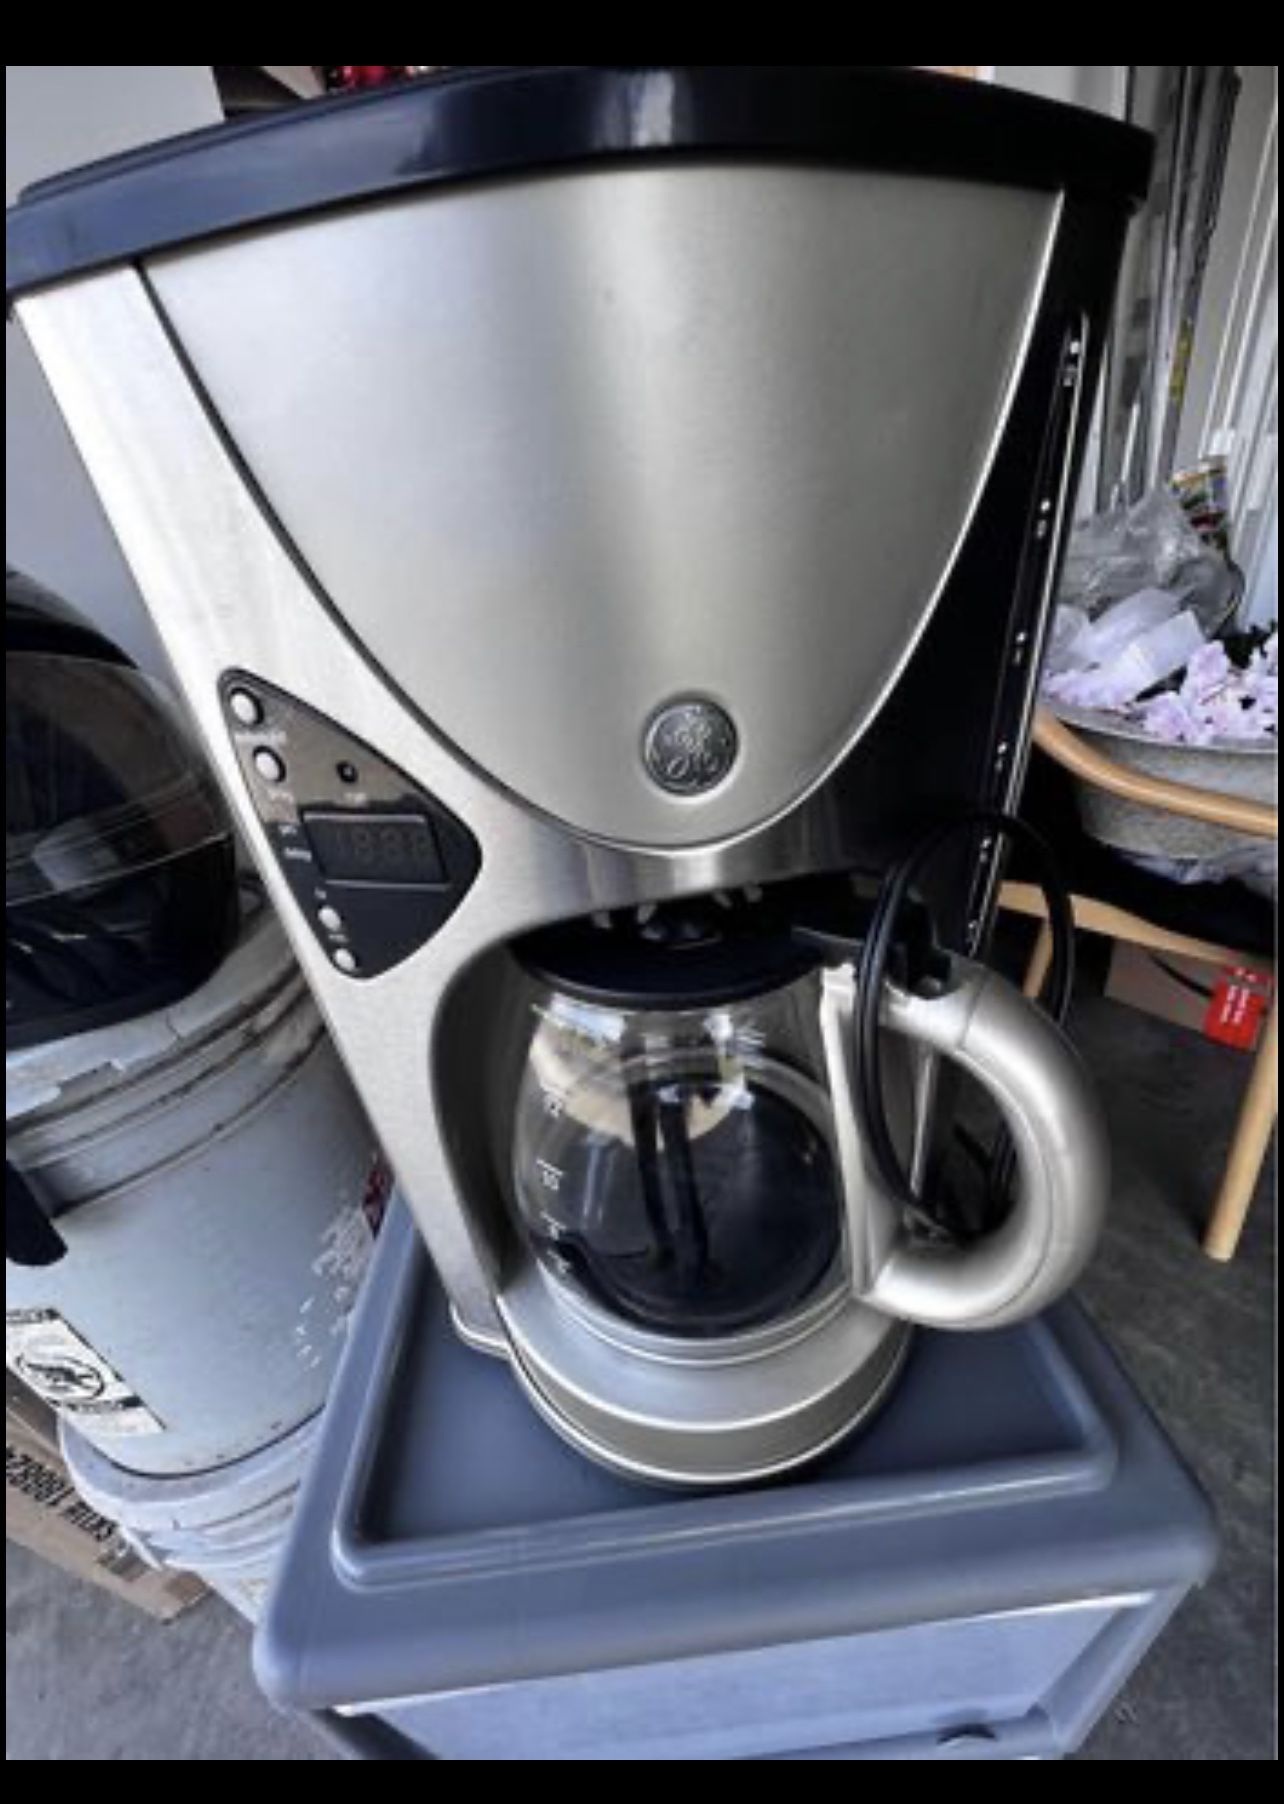 GE Brand new Coffee Maker